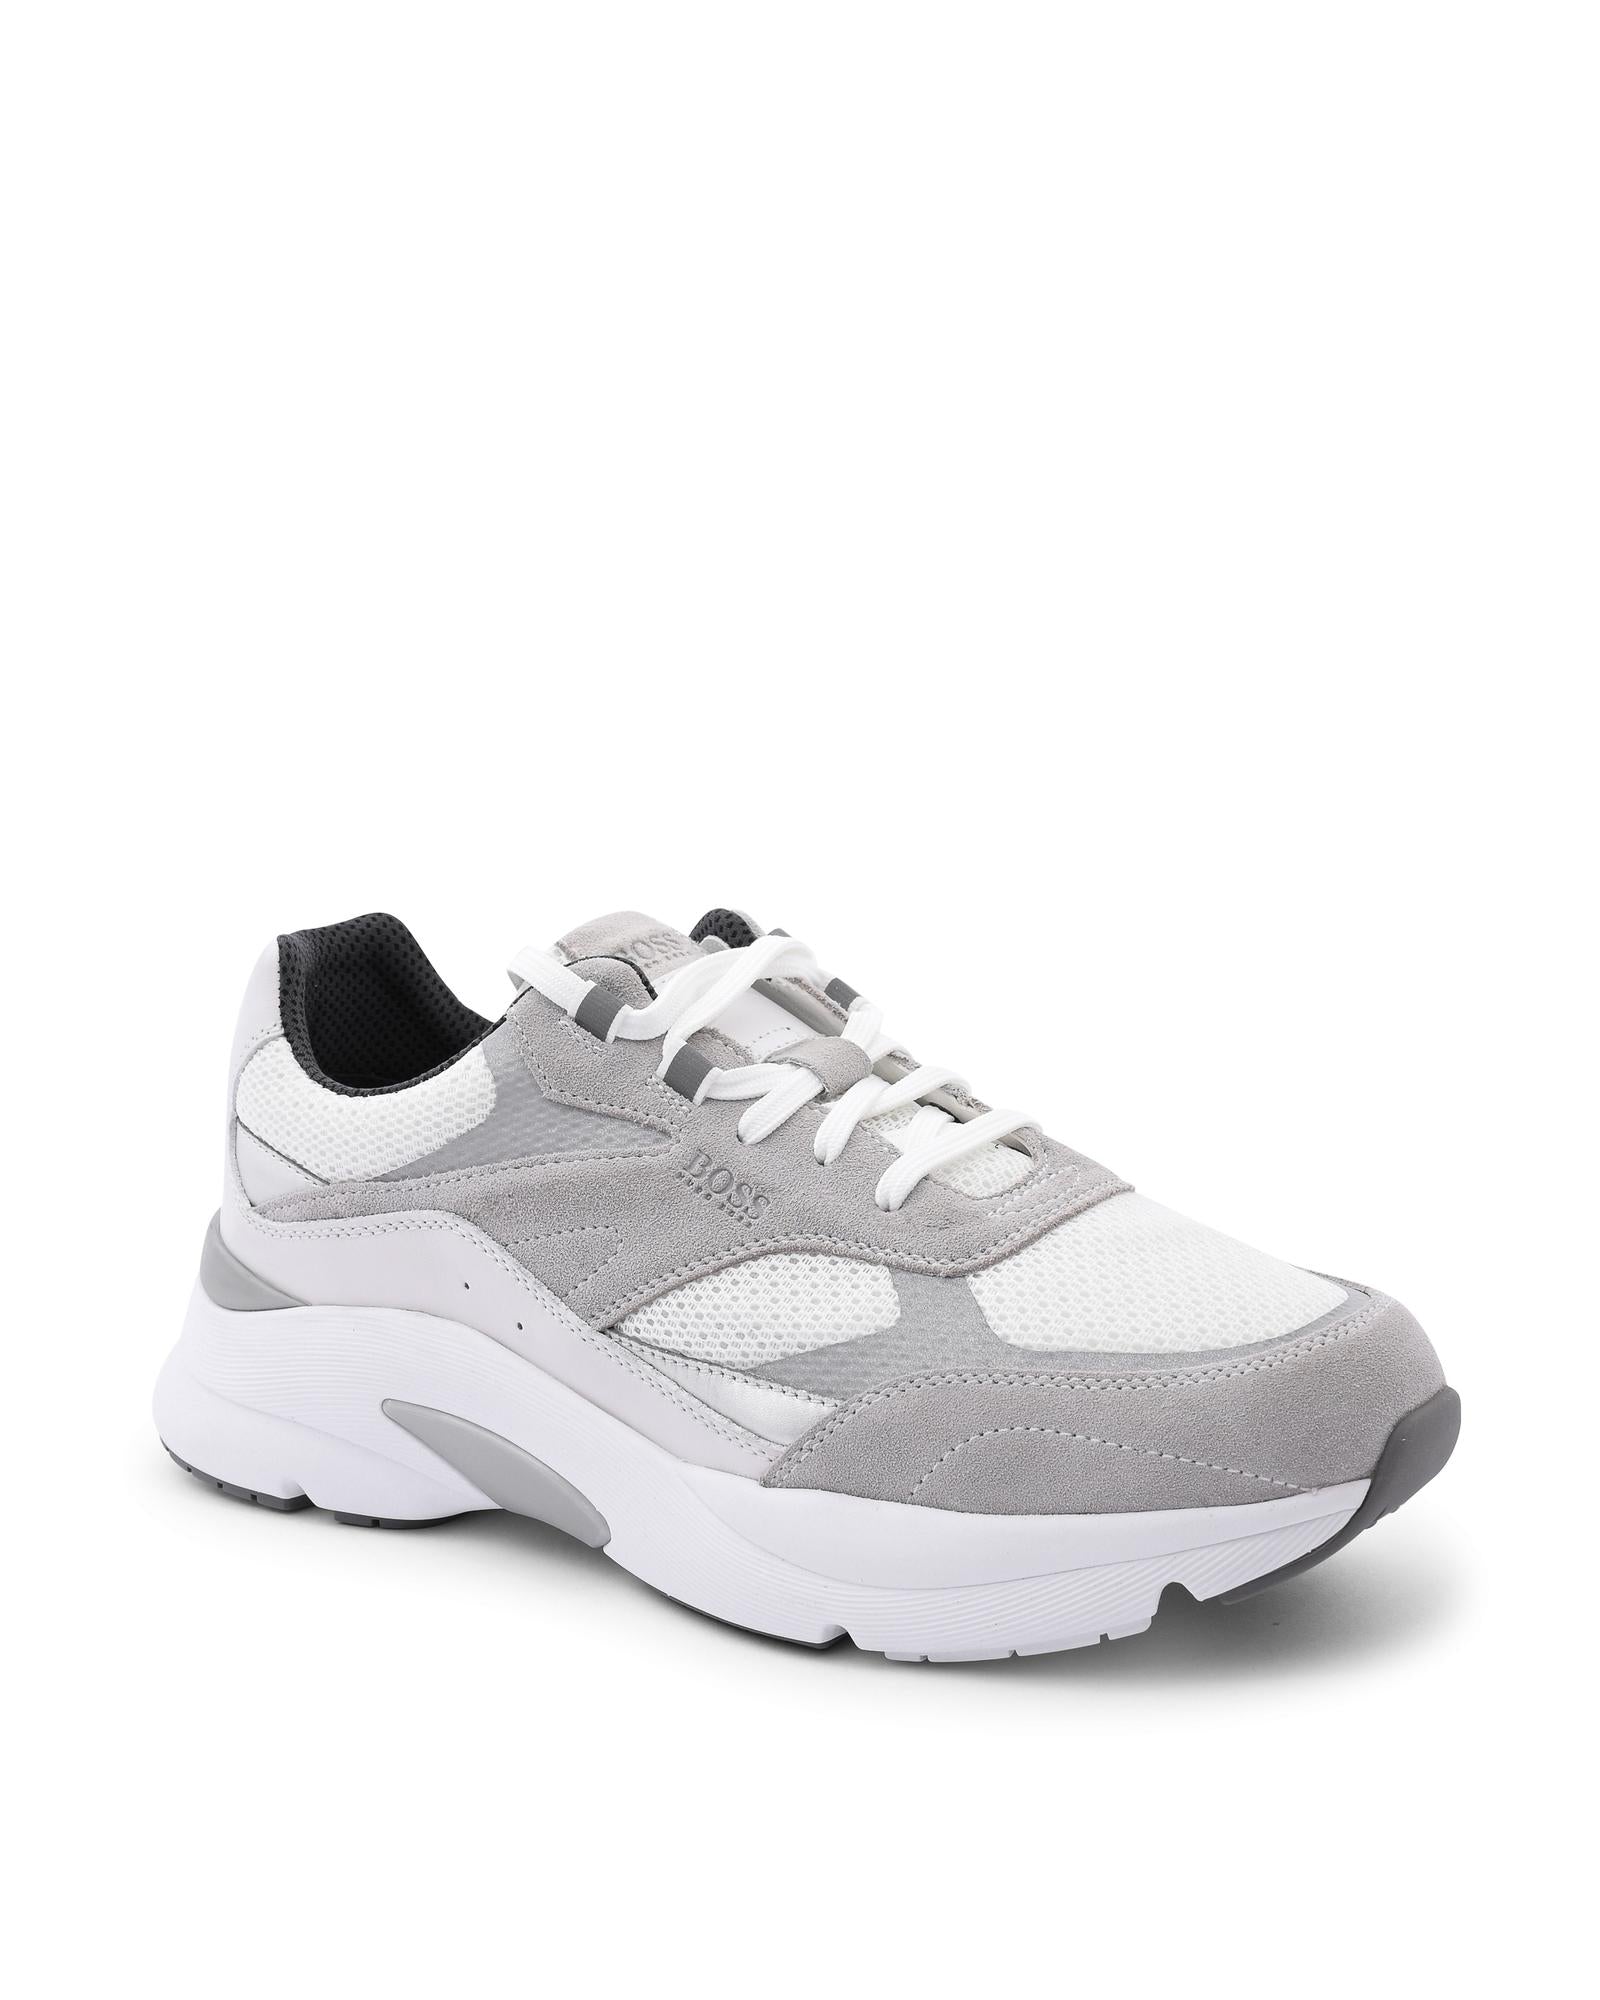 Men's White Leather Sneakers in White - 43 EU